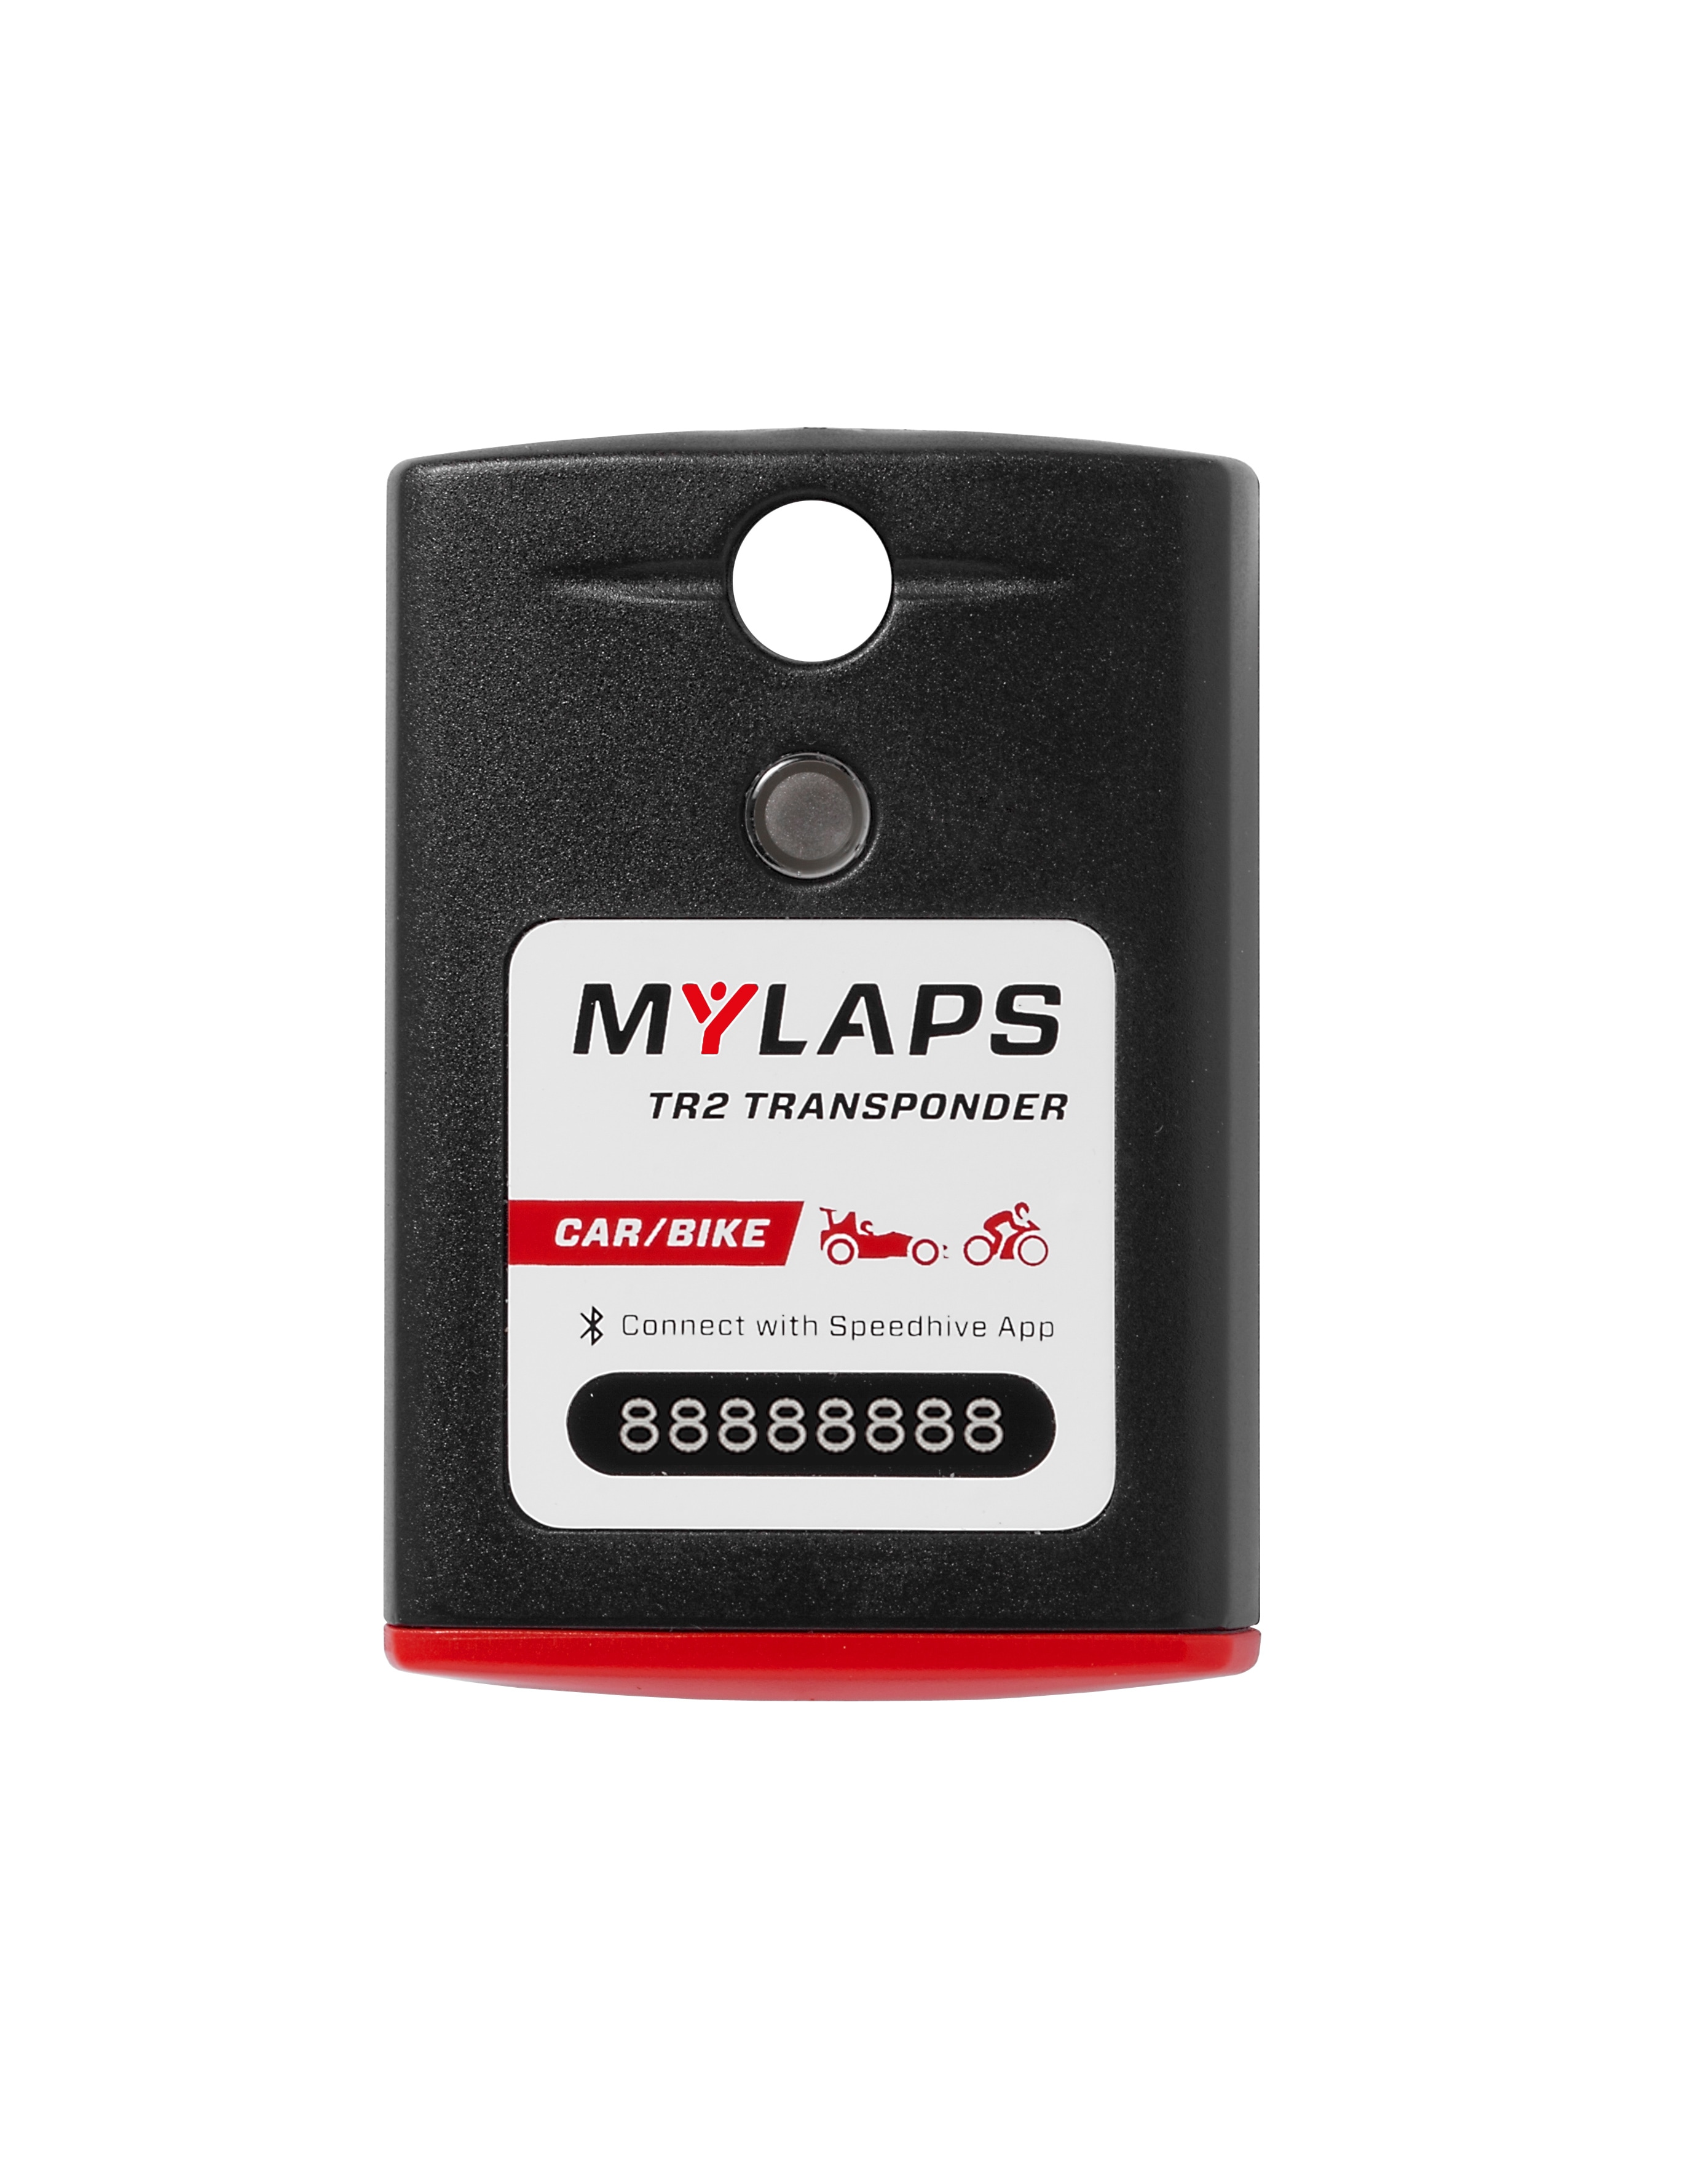 Transponder MyLaps TR2 Car/Bike 5 year (Not MX)